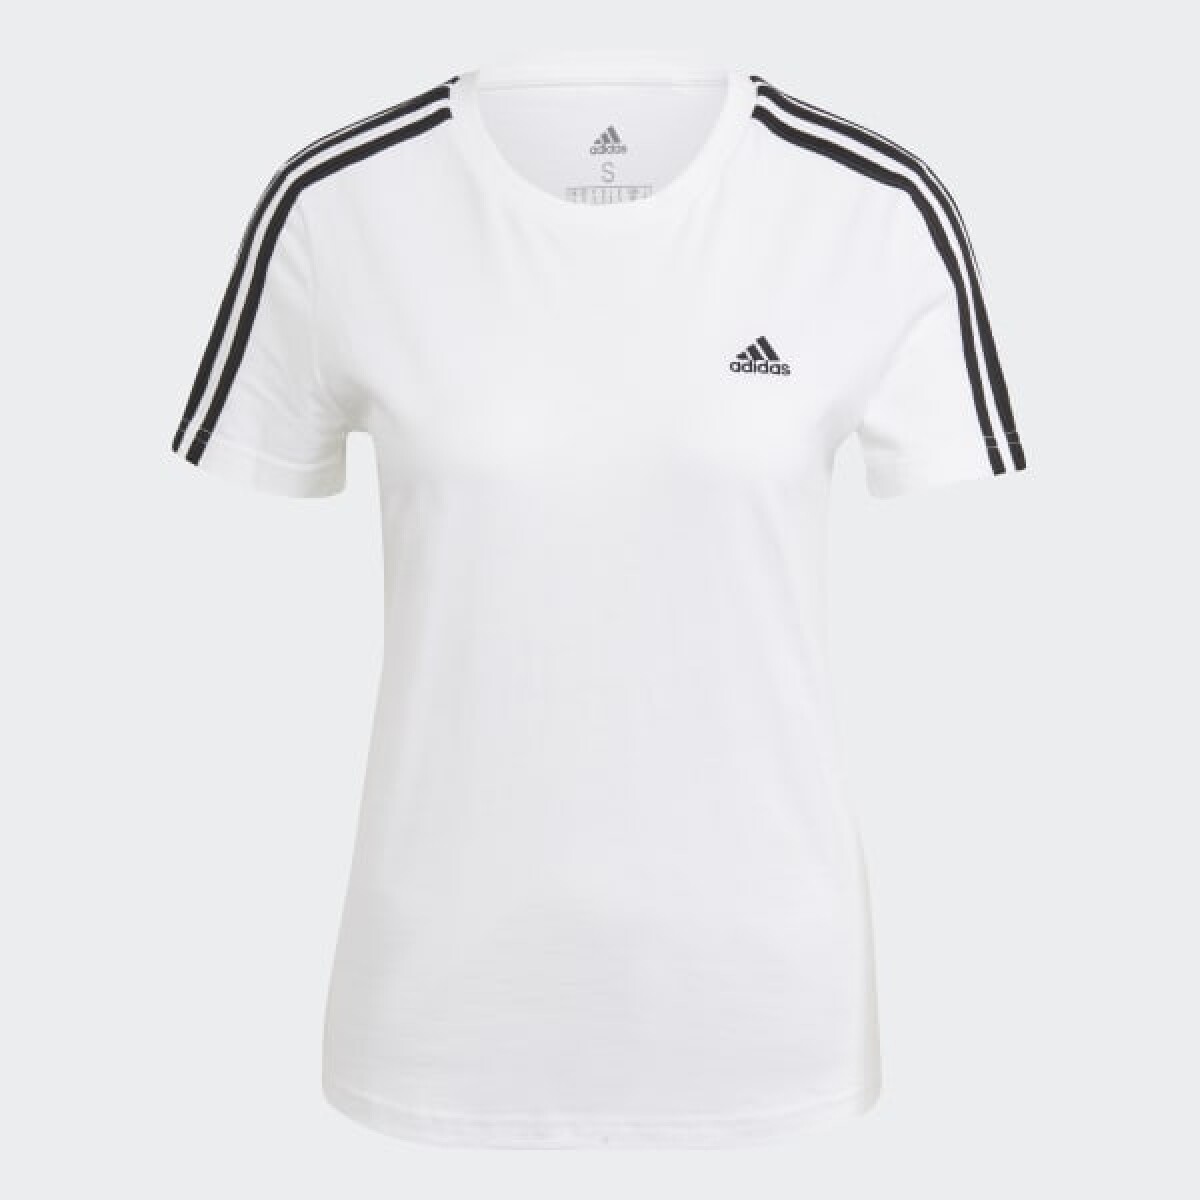 Remera Adidas Dama W3ST White/Black - S/C 